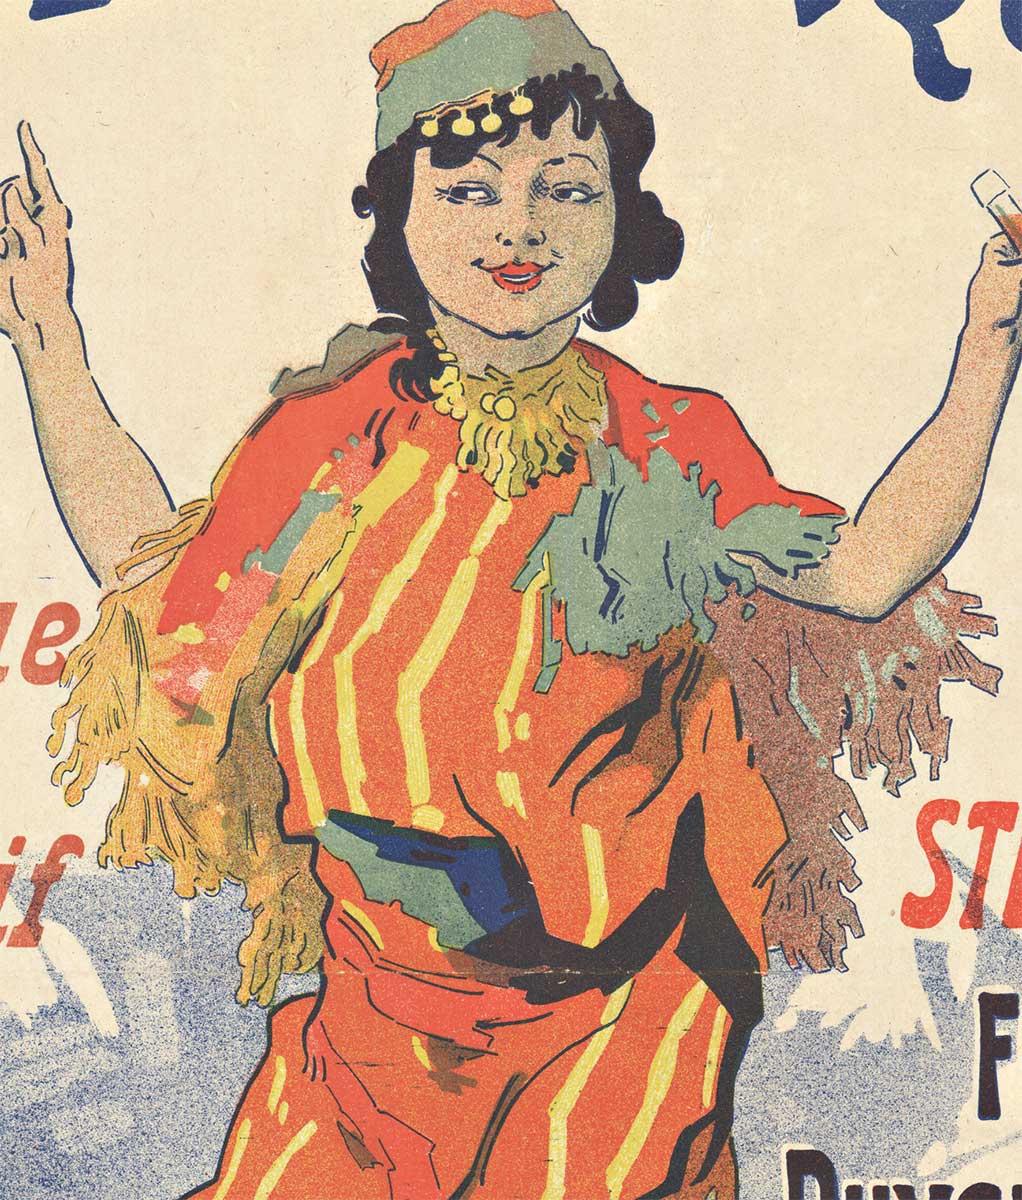 Original Kola Marque, 1895 vintage French liquor poster by Jules Cheret - Print by Jules Chéret